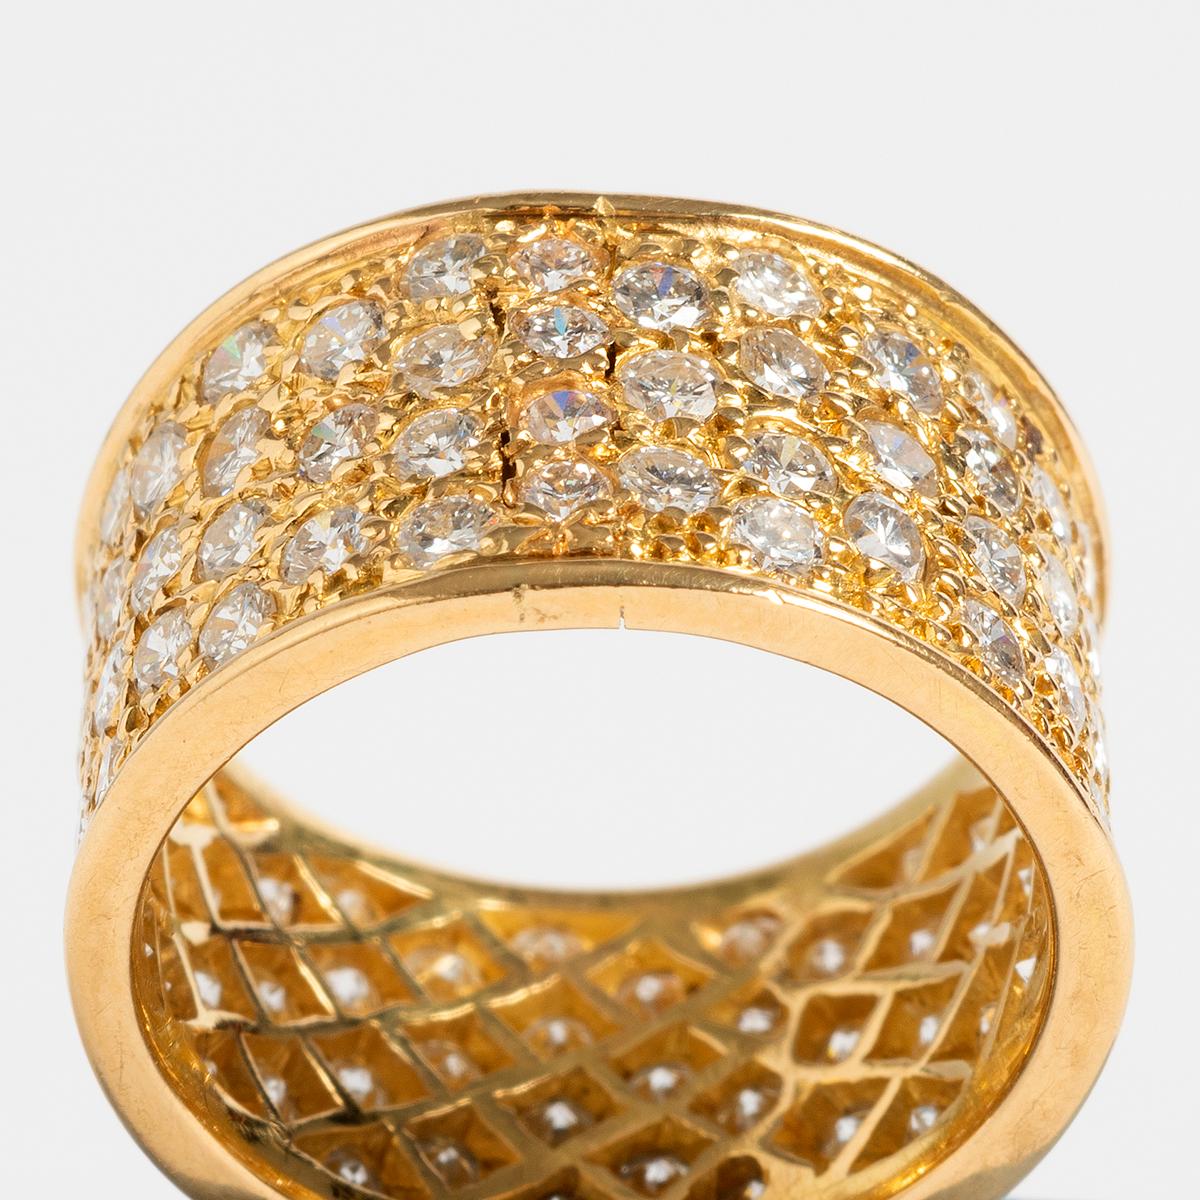 Round Cut Glamorous Pave Set Diamond Ring, 18K Yellow Gold